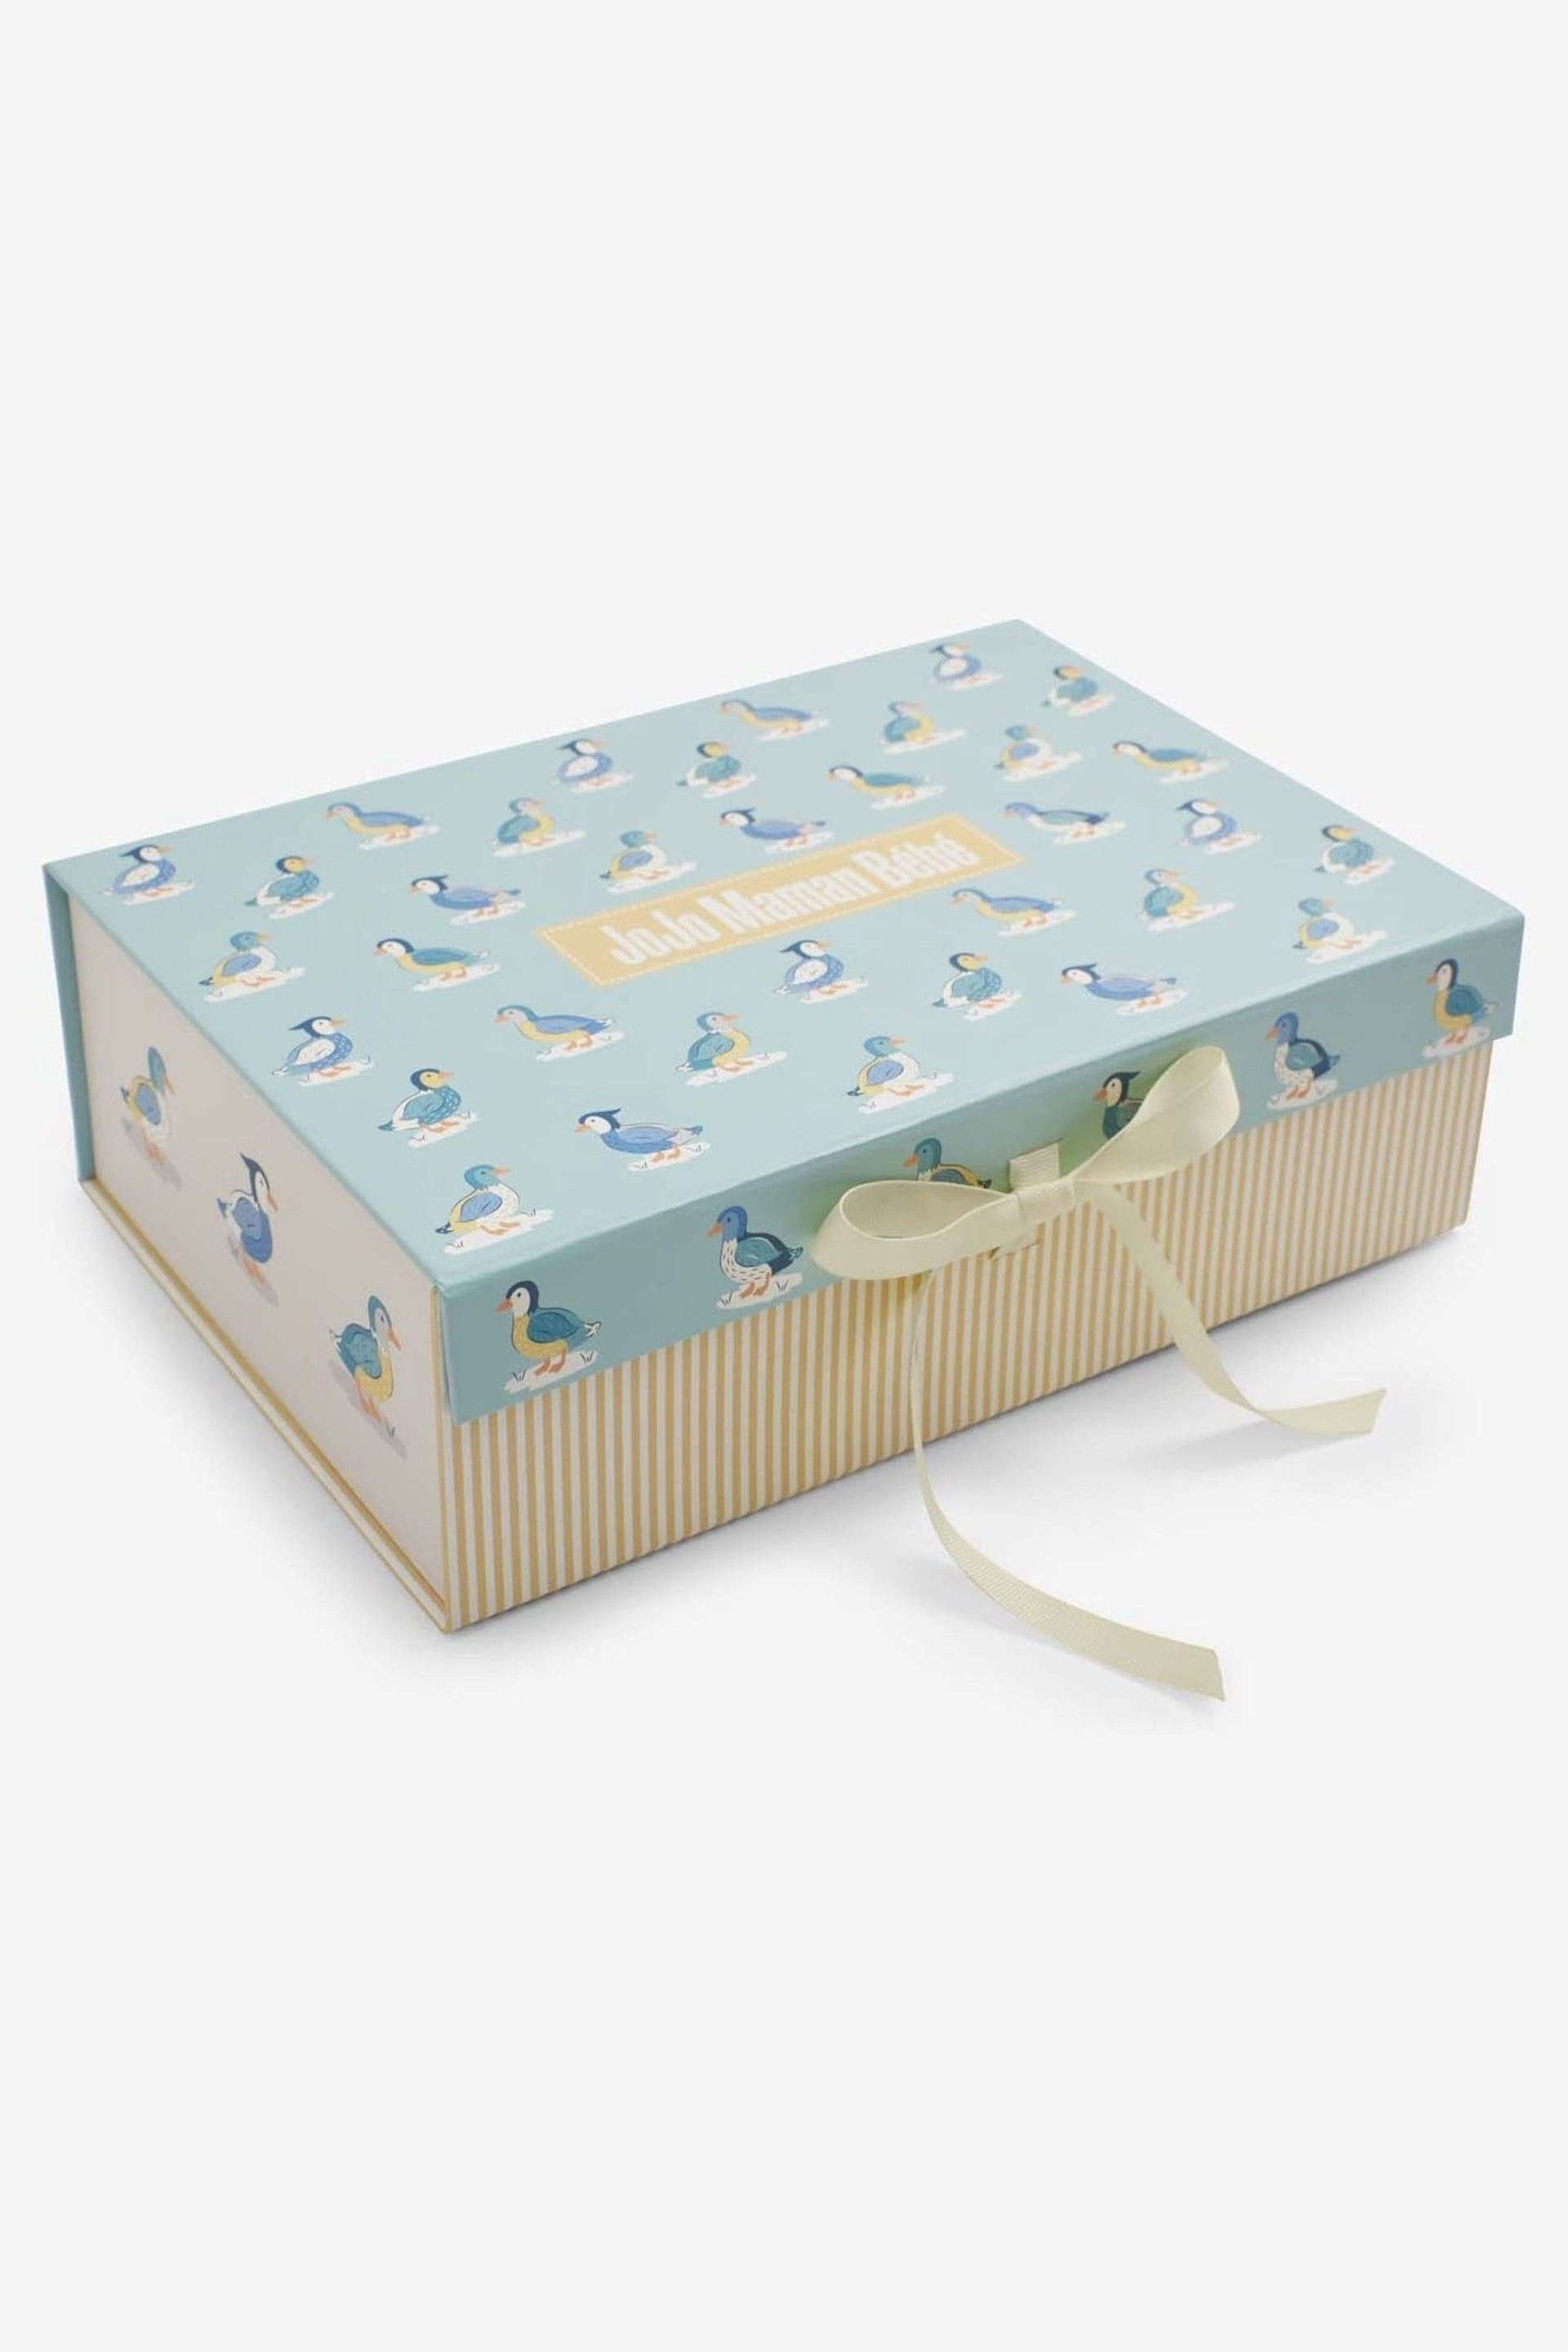 JoJo Maman Bébé Duck Gift Box - Image 2 of 2